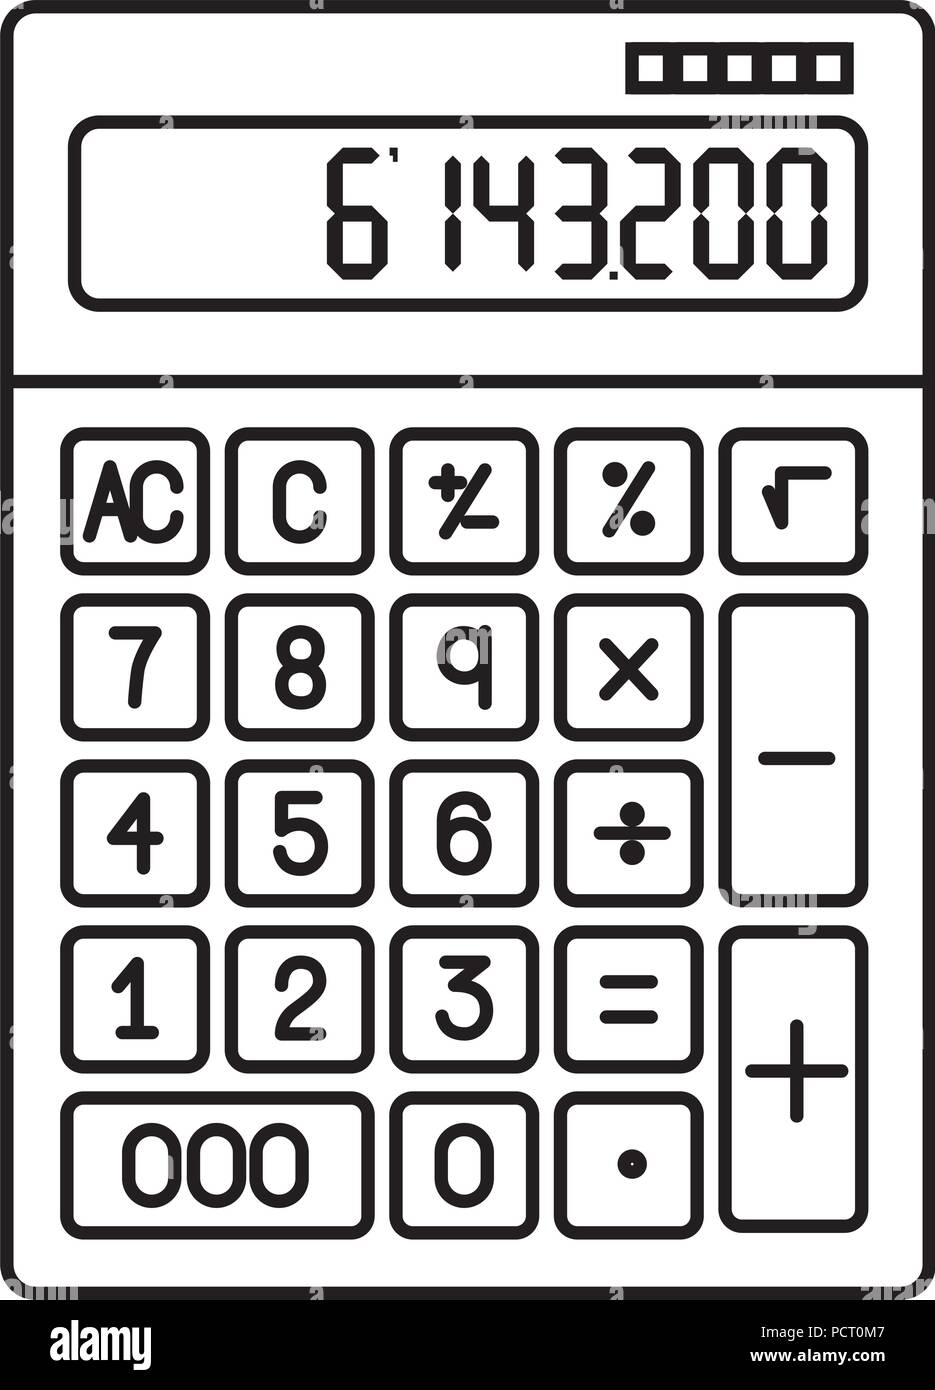 Taschenrechner Mathematik Gerätesymbol Stock-Vektorgrafik - Alamy